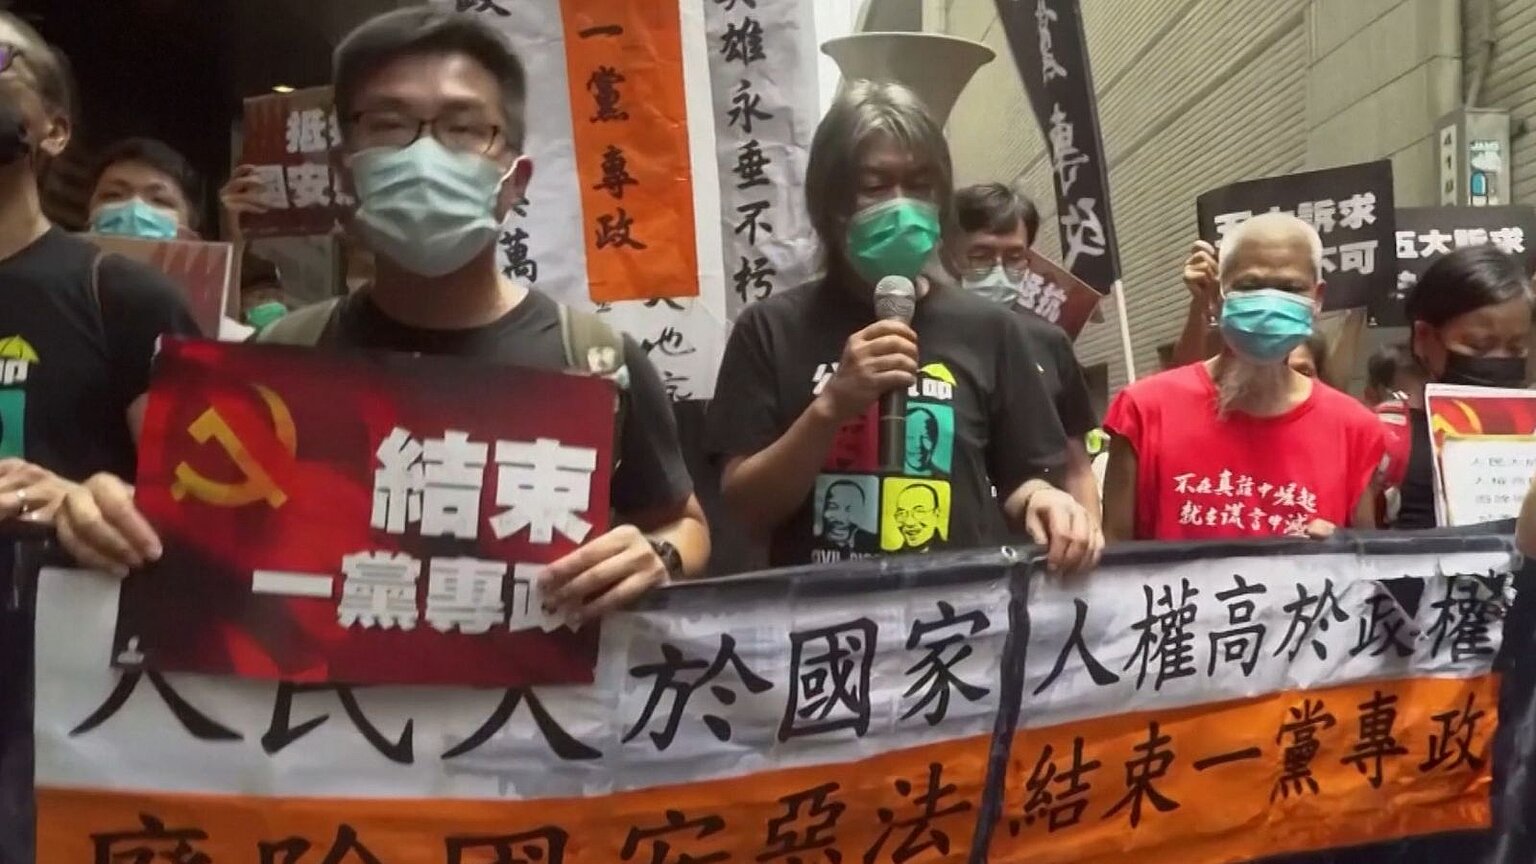  – Demonstration gegen Sicherheitsgesetz in Hongkong. Foto: BR